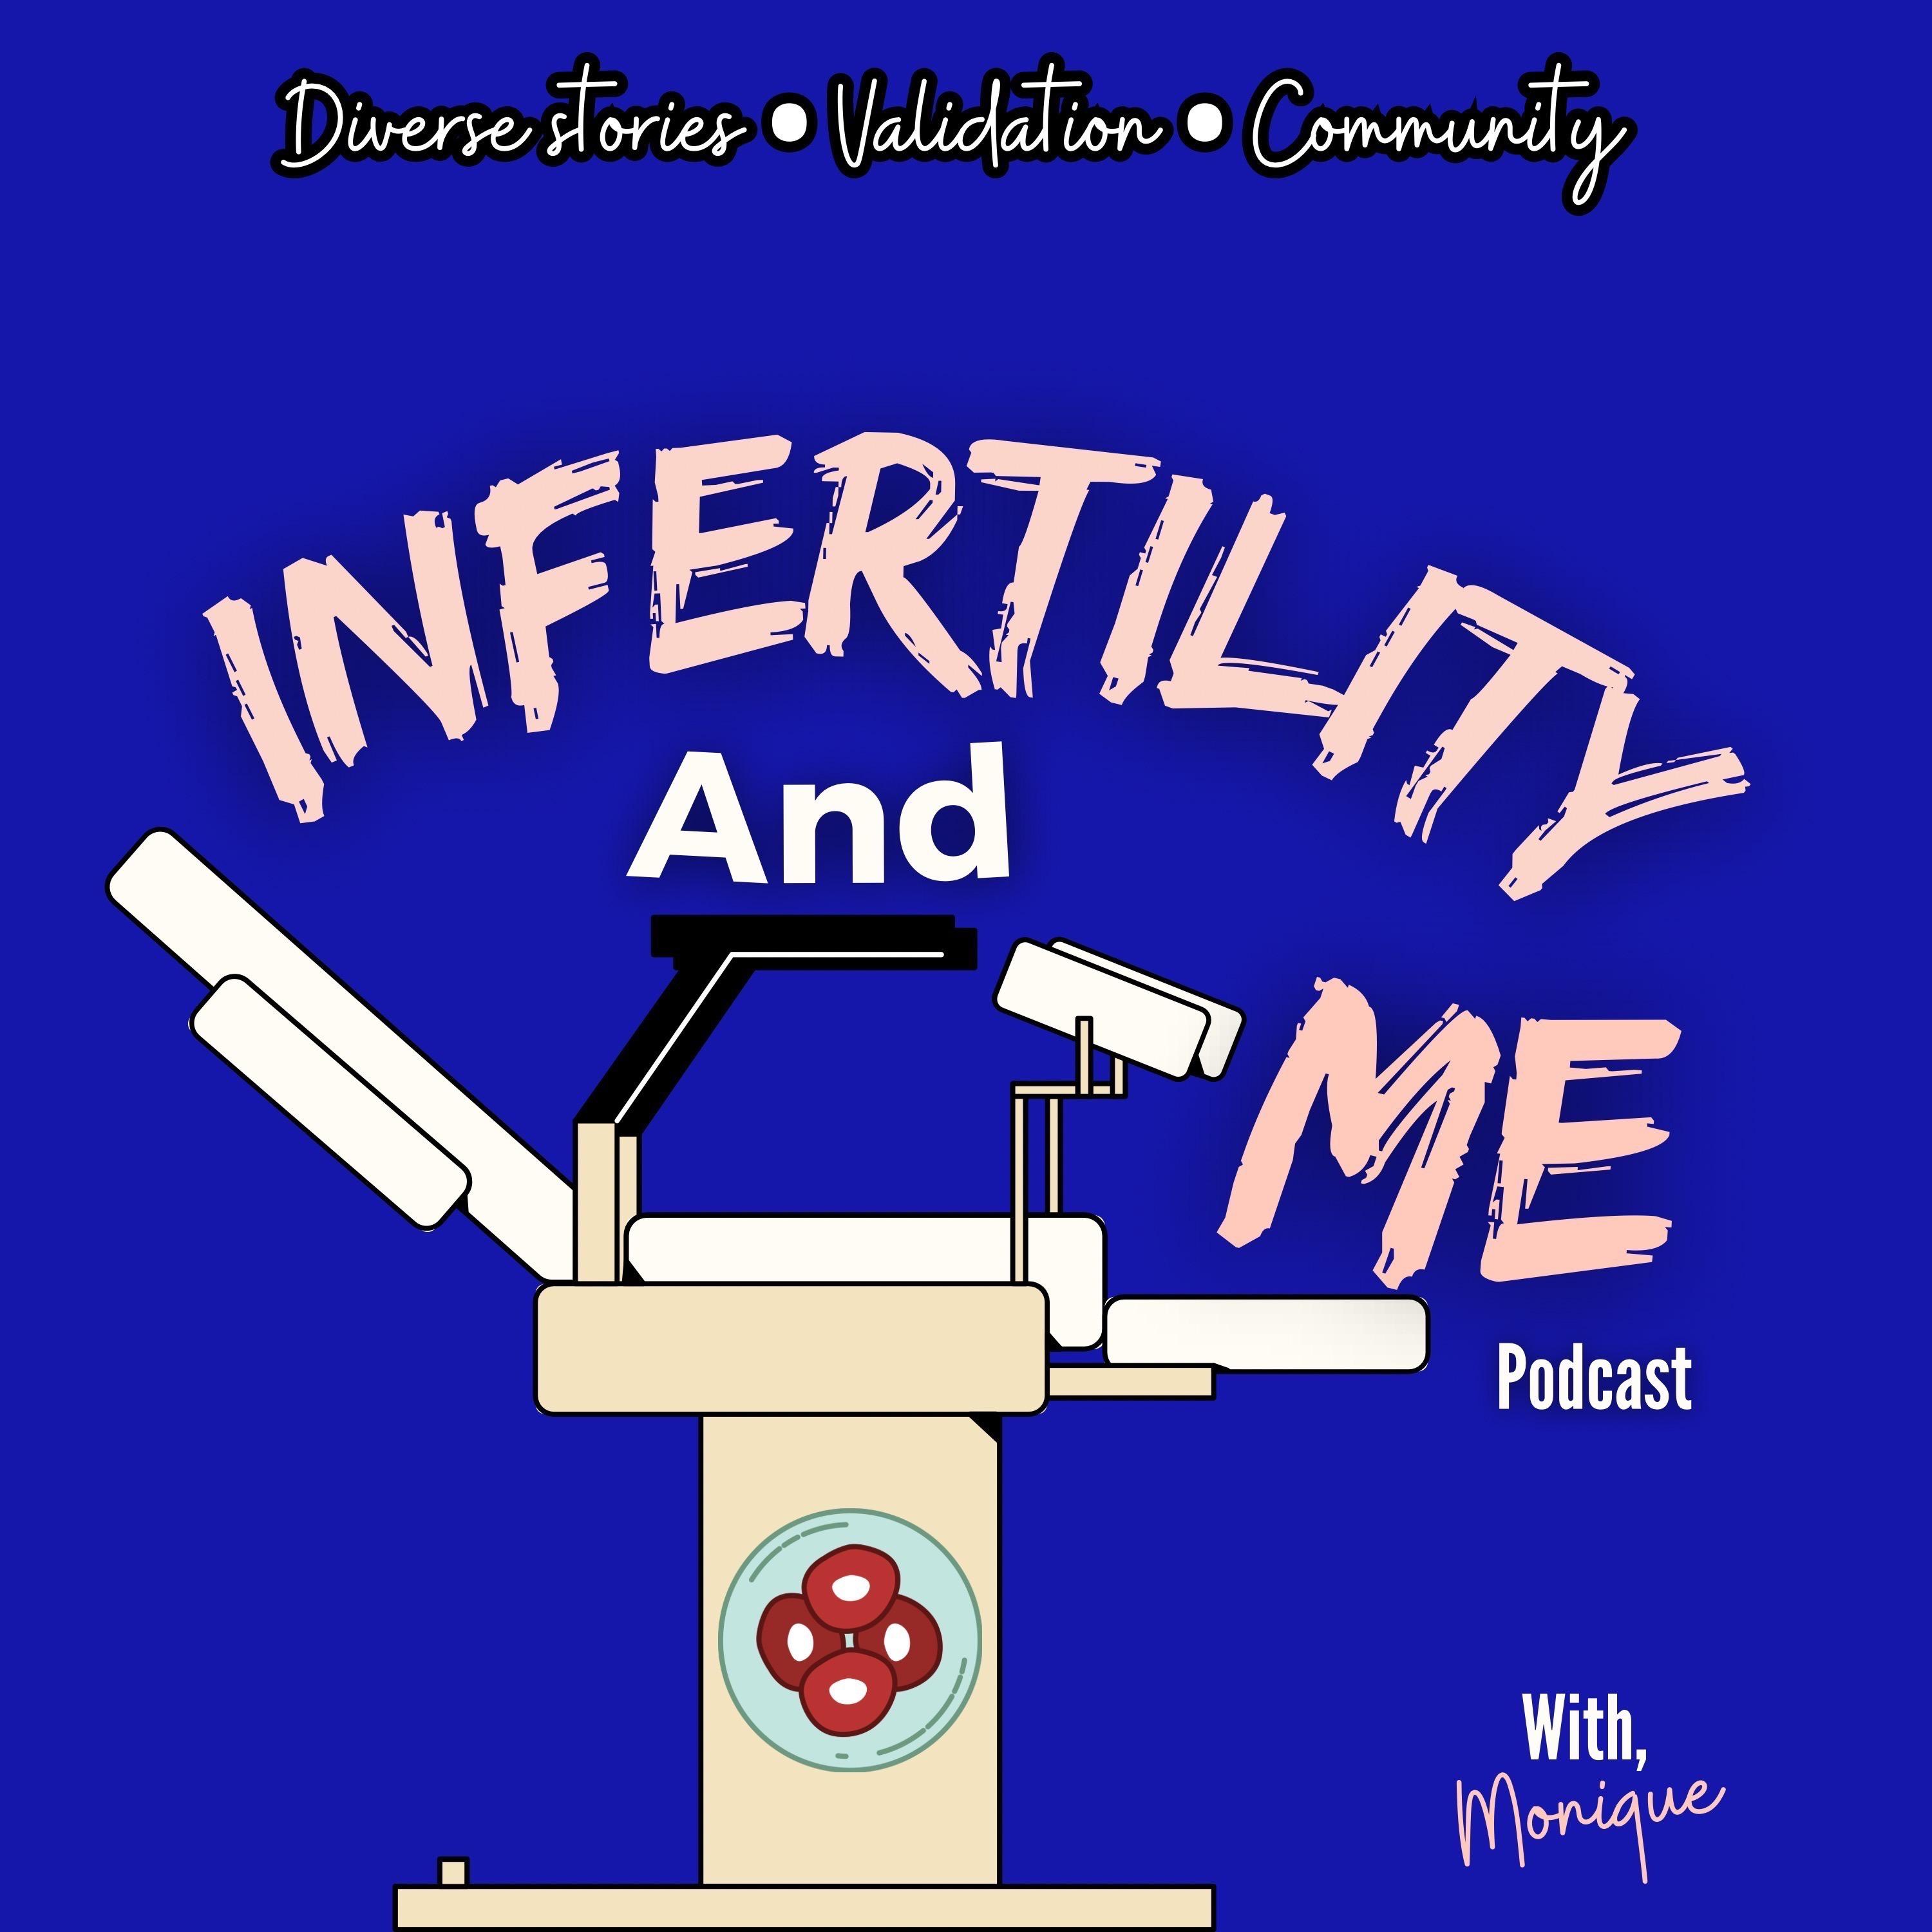 Infertility And Me: Stories of Infertility Survivors, IVF, & TTC